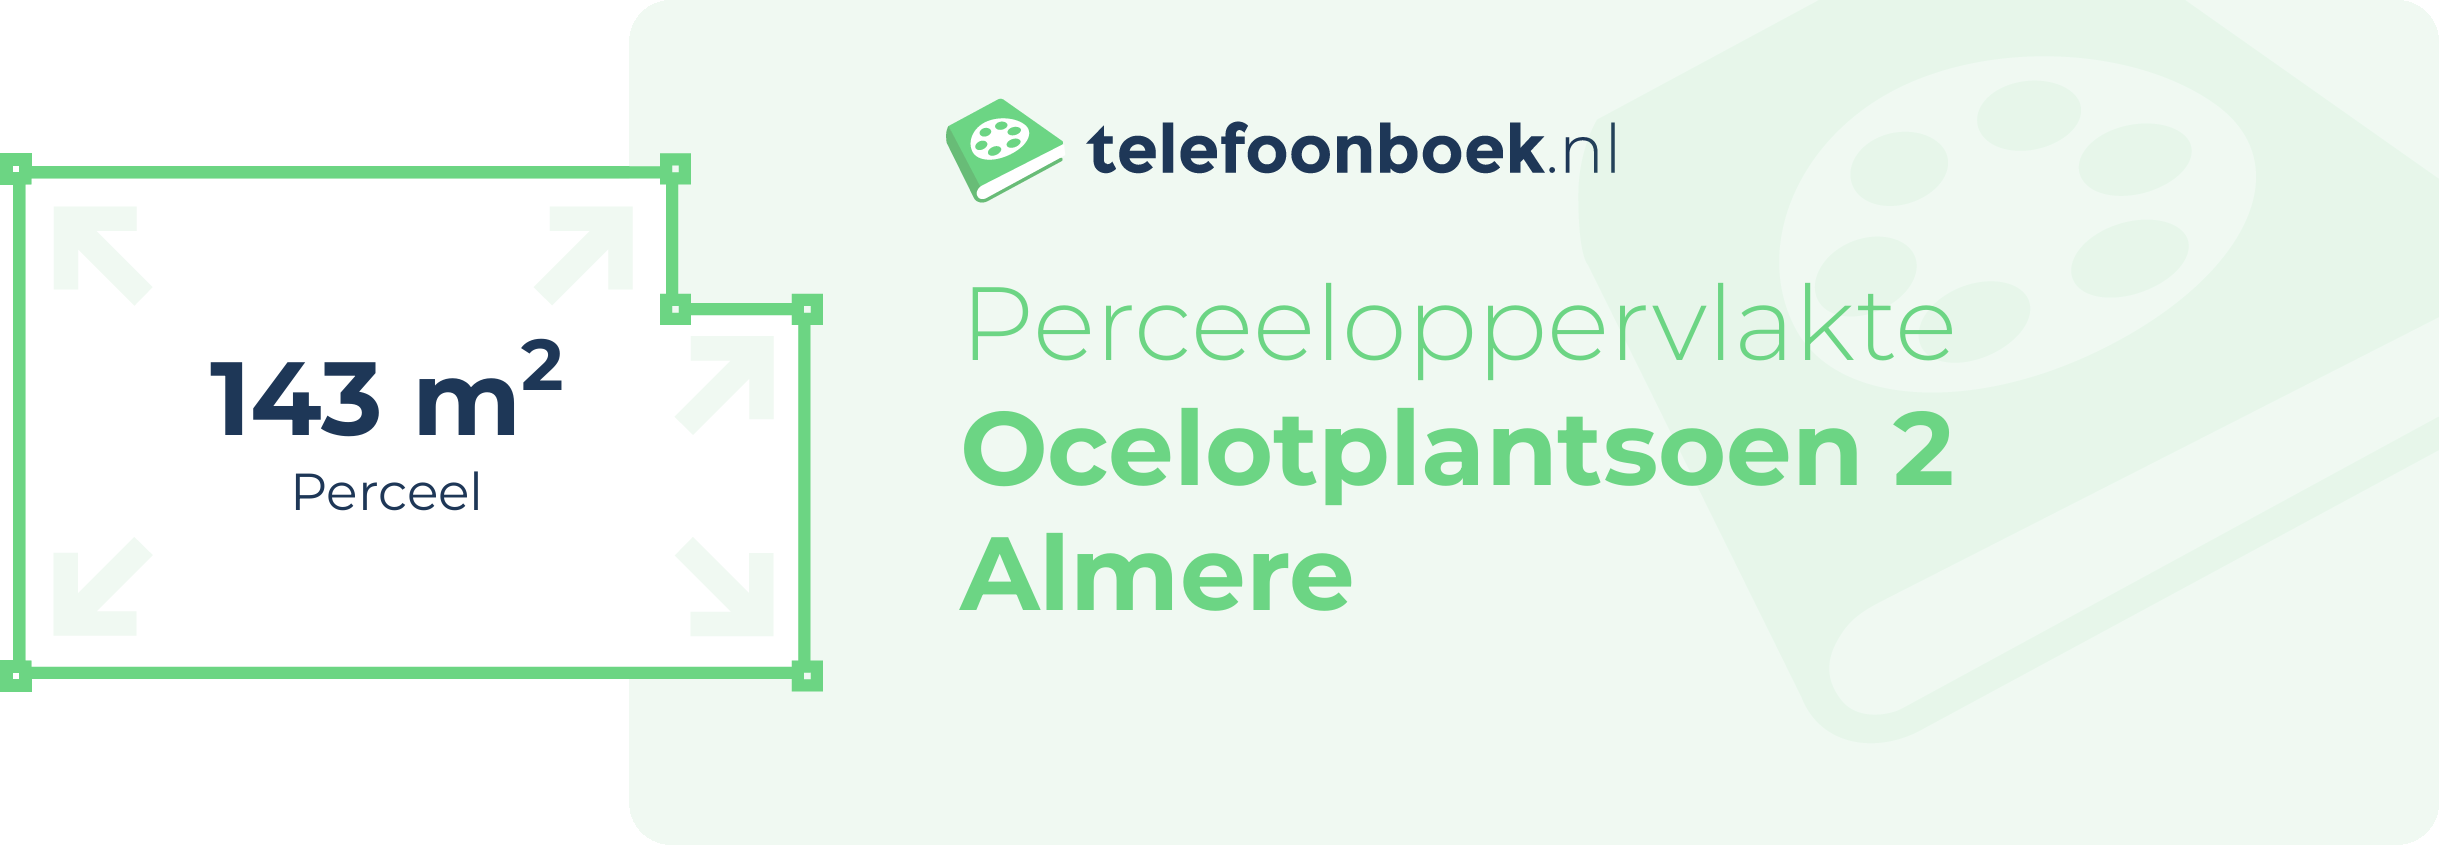 Perceeloppervlakte Ocelotplantsoen 2 Almere